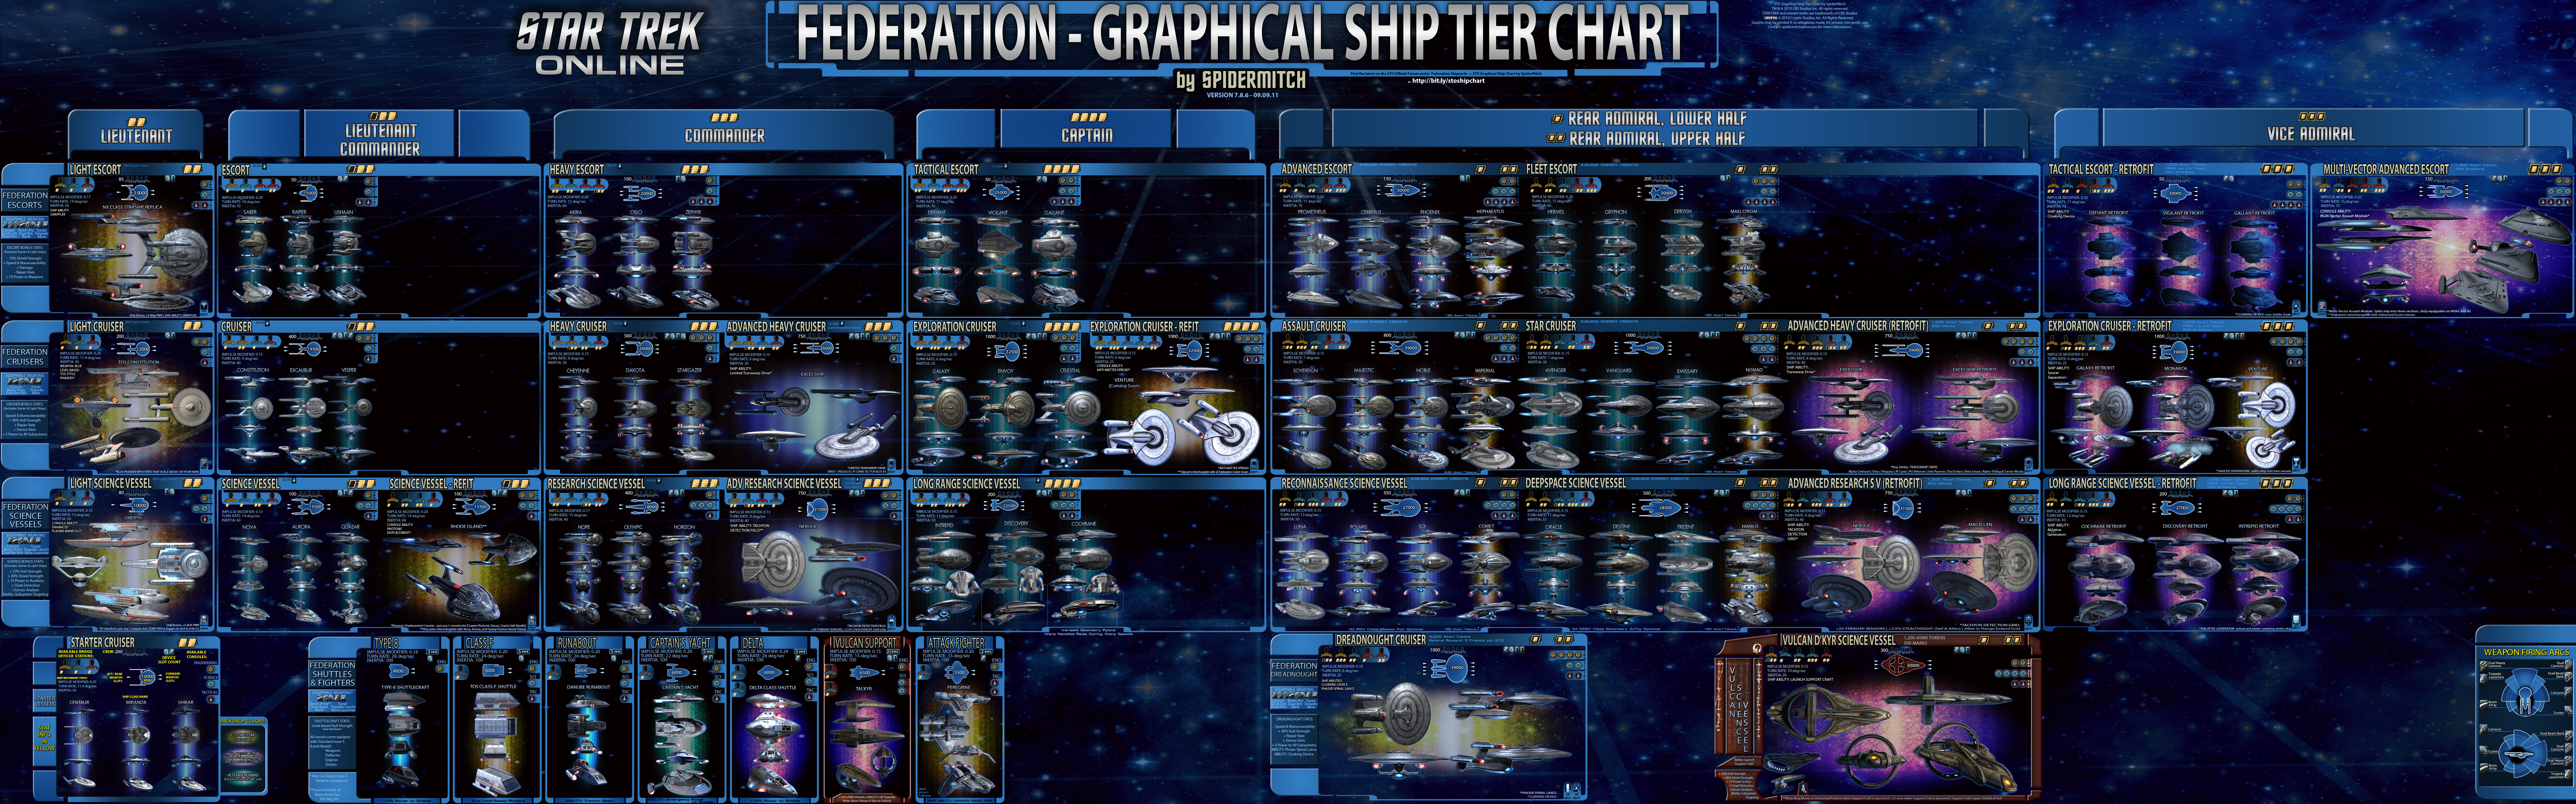 star trek online ships by rank